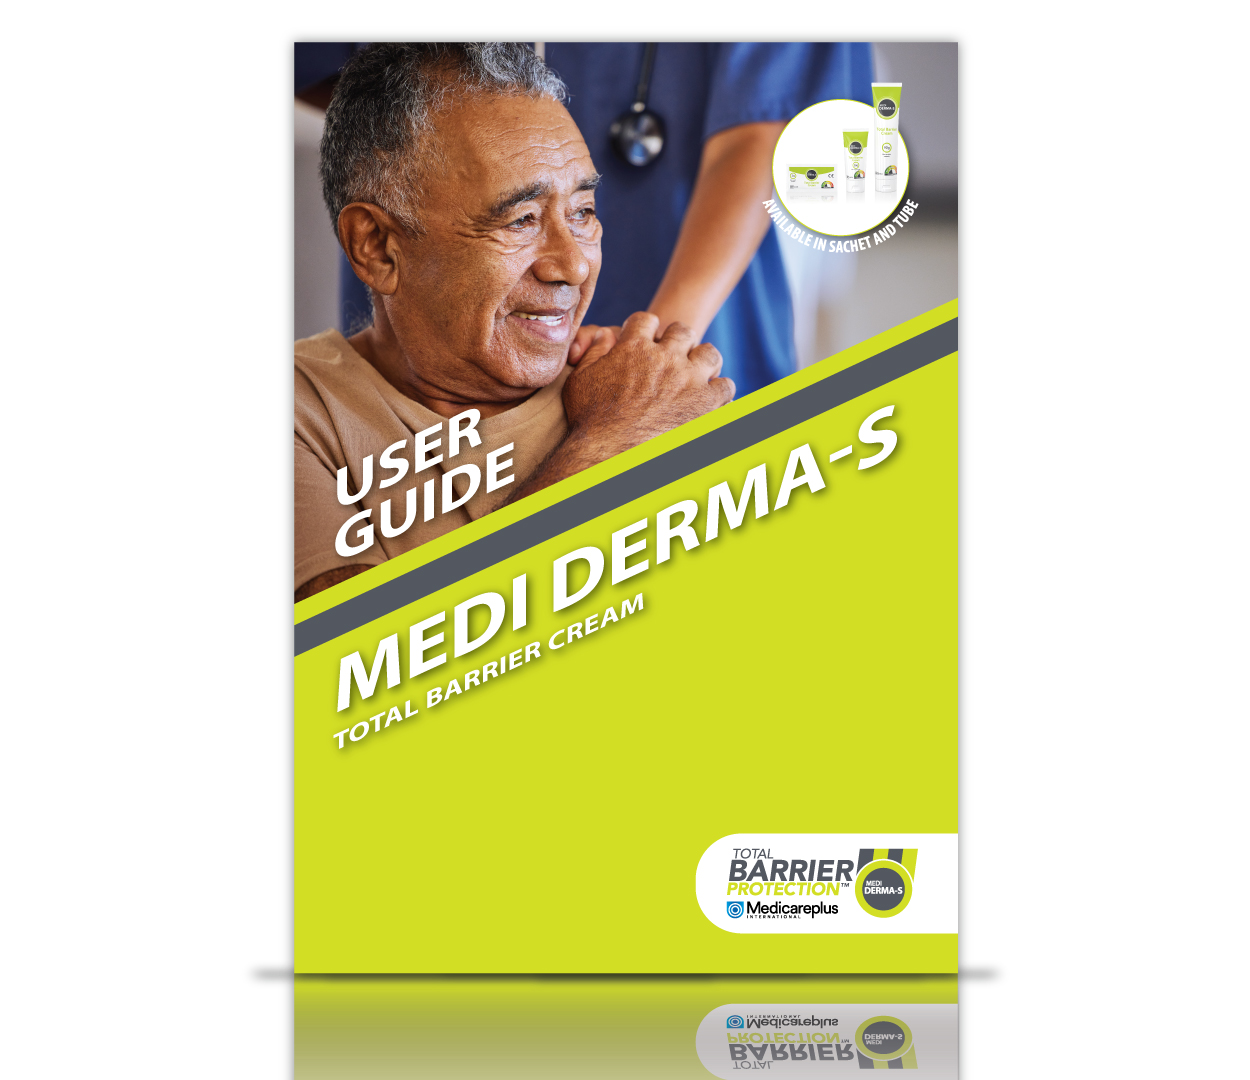 User Guide - Medi Derma-S Barrier Cream